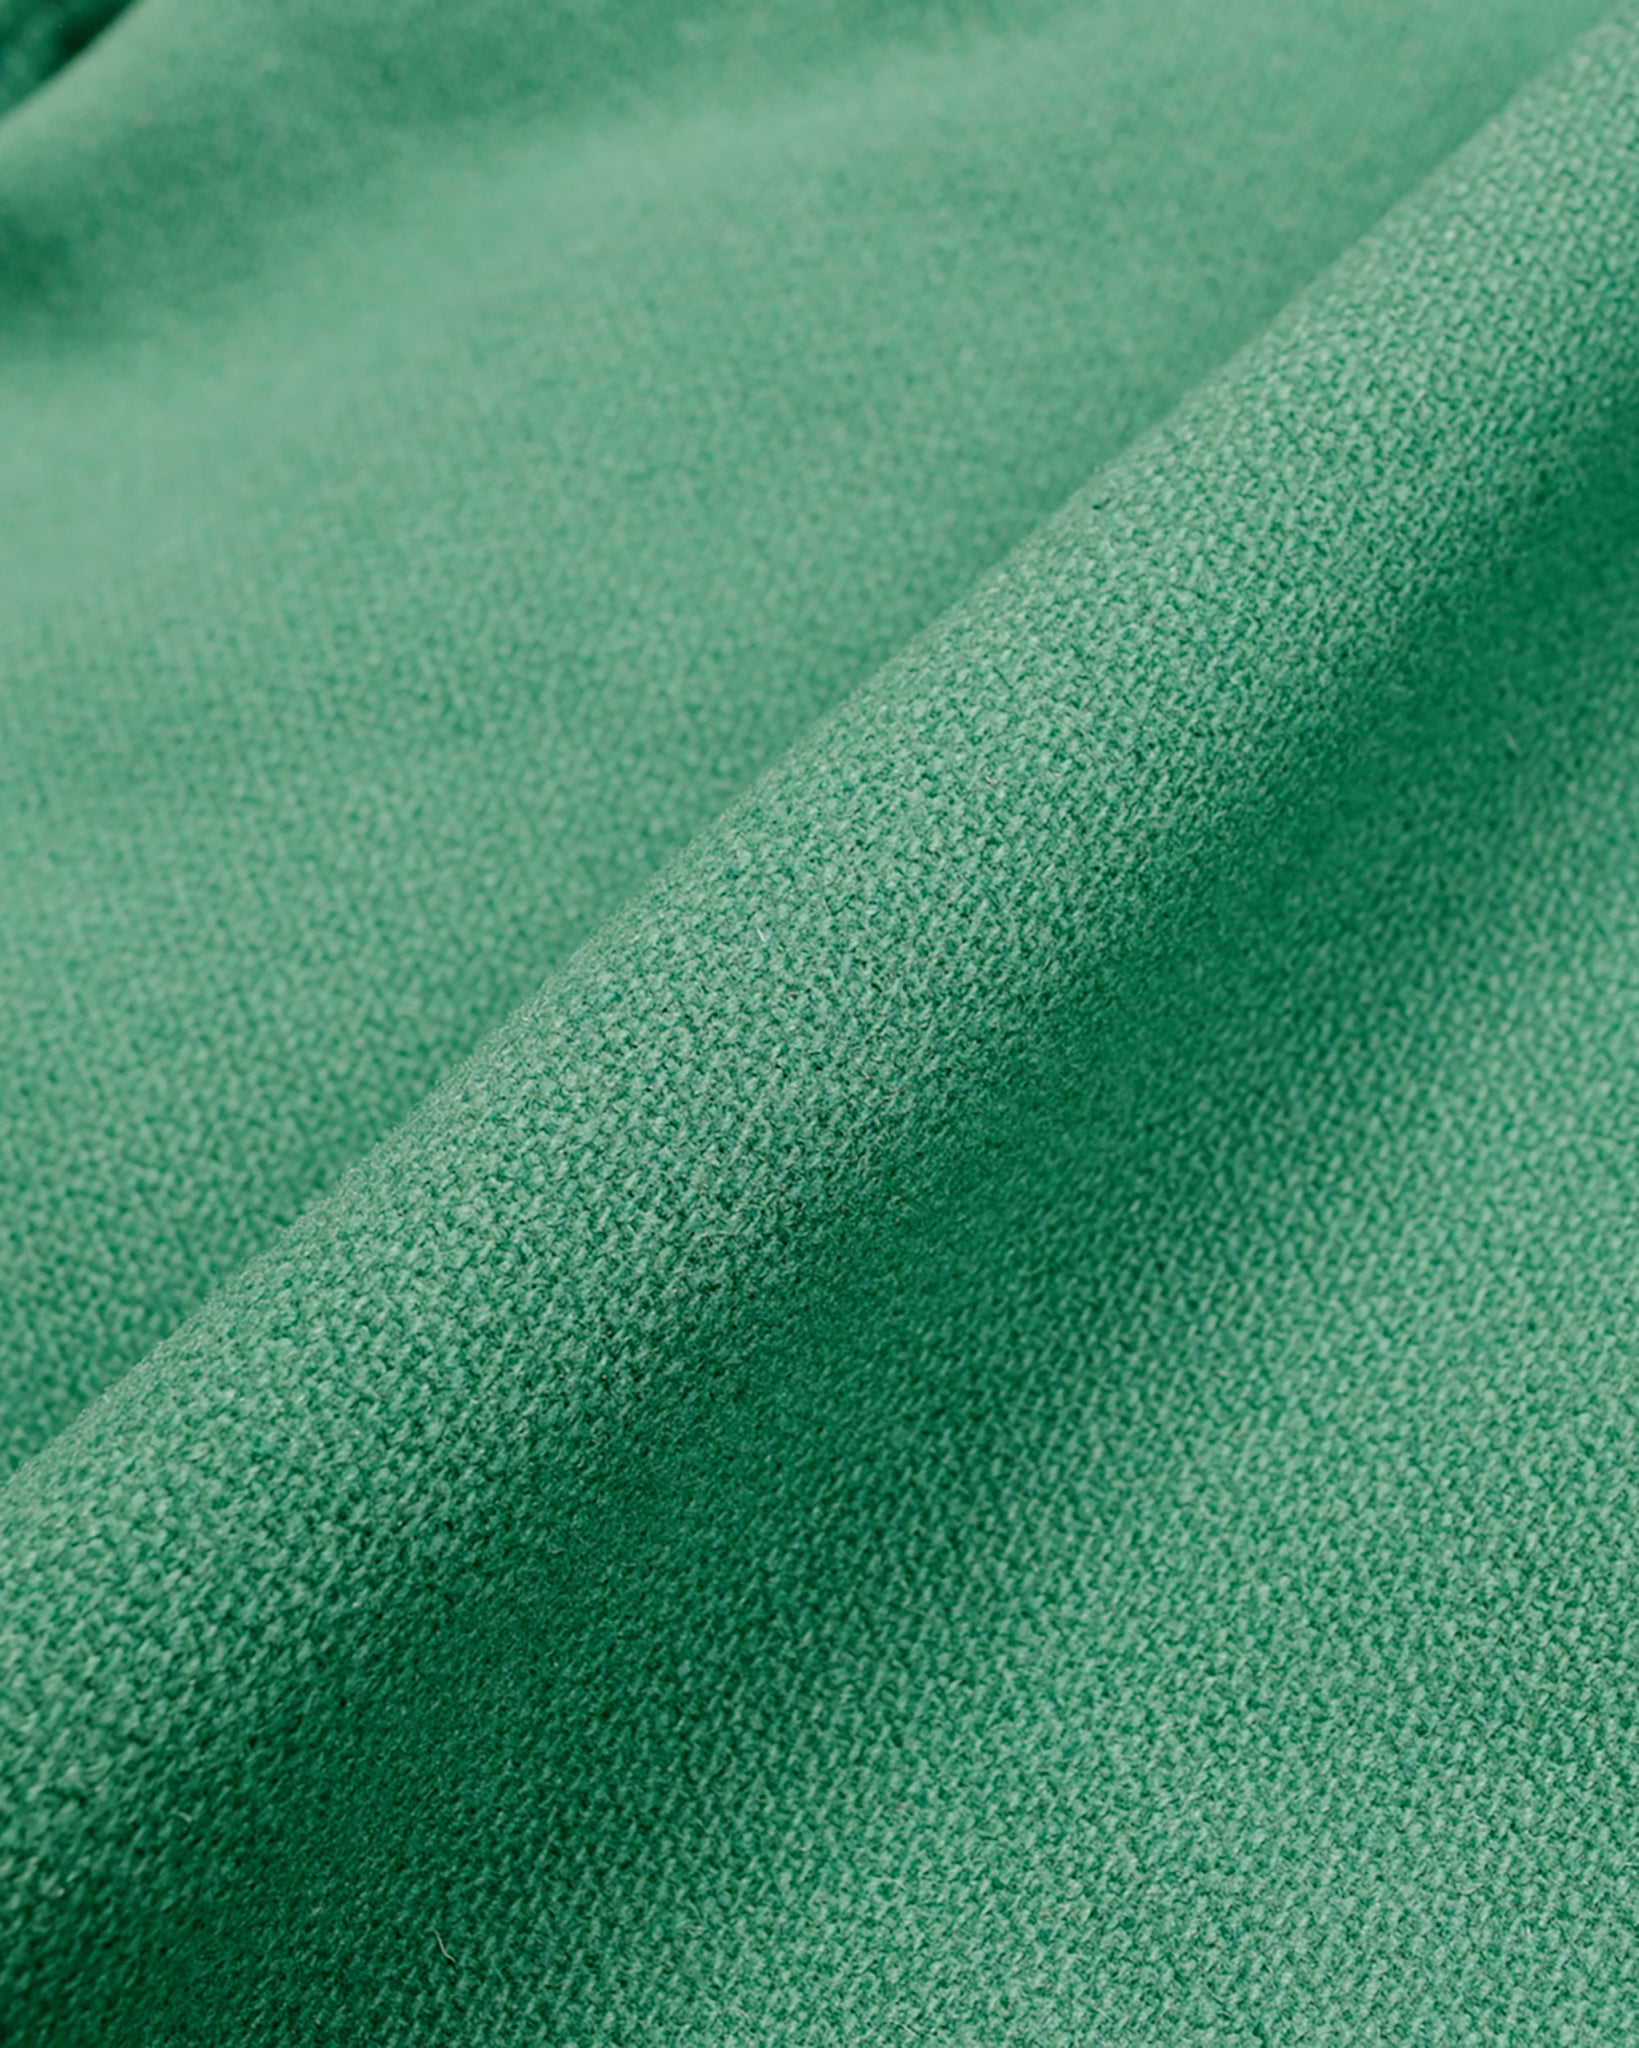 The Real McCoy's MJ23120 Wool Varsity Jacket Shamrock fabric